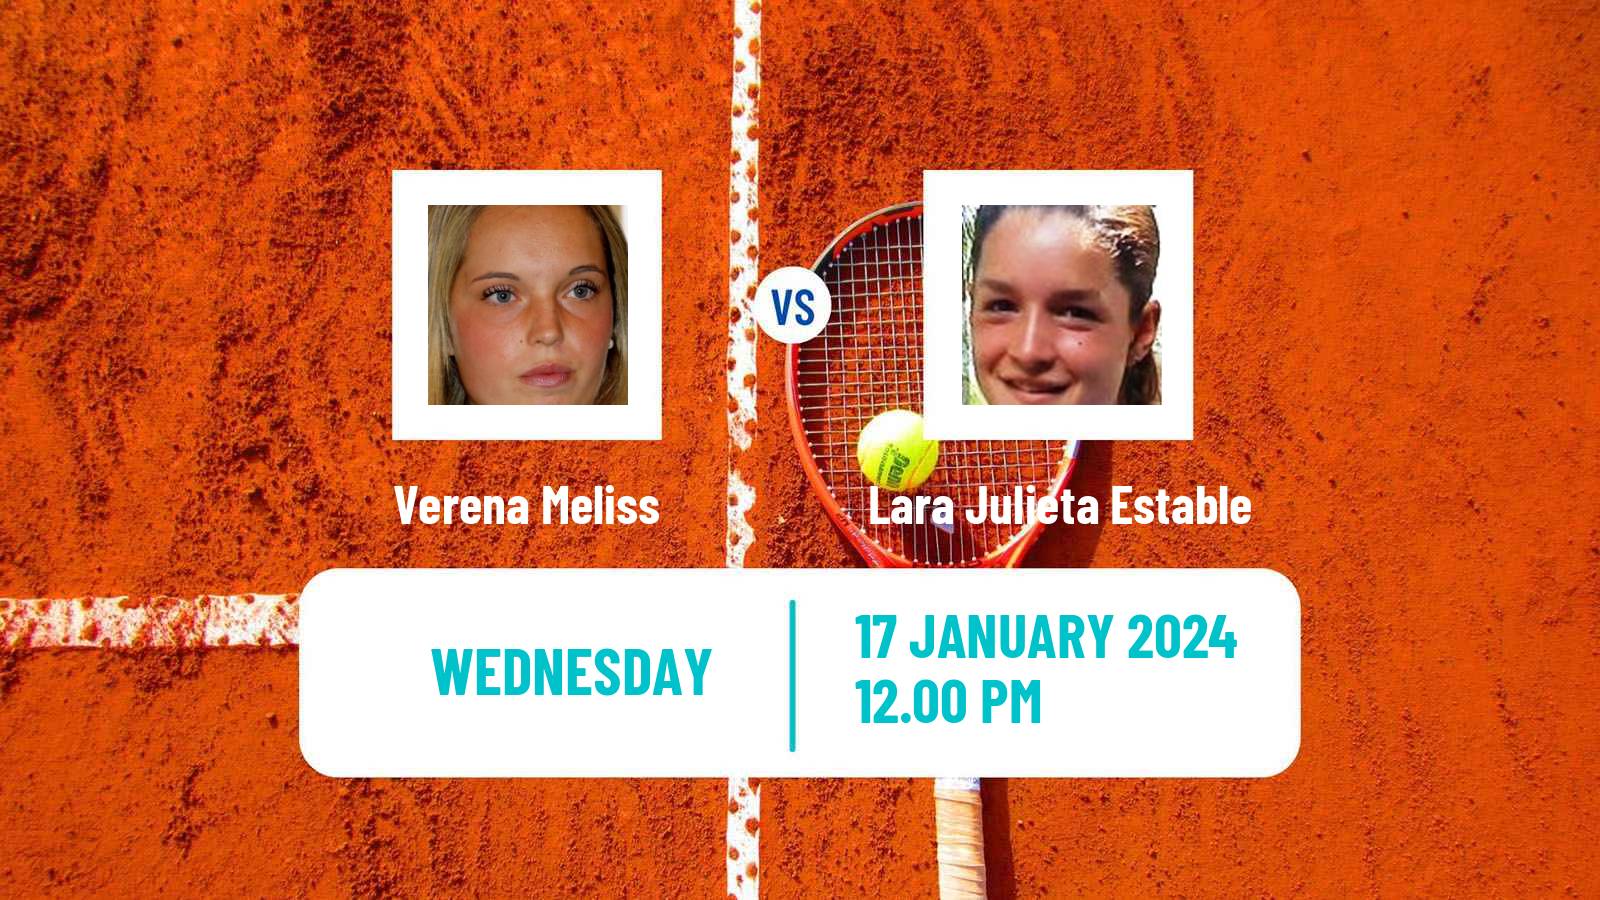 Tennis ITF W35 Buenos Aires Women Verena Meliss - Lara Julieta Estable